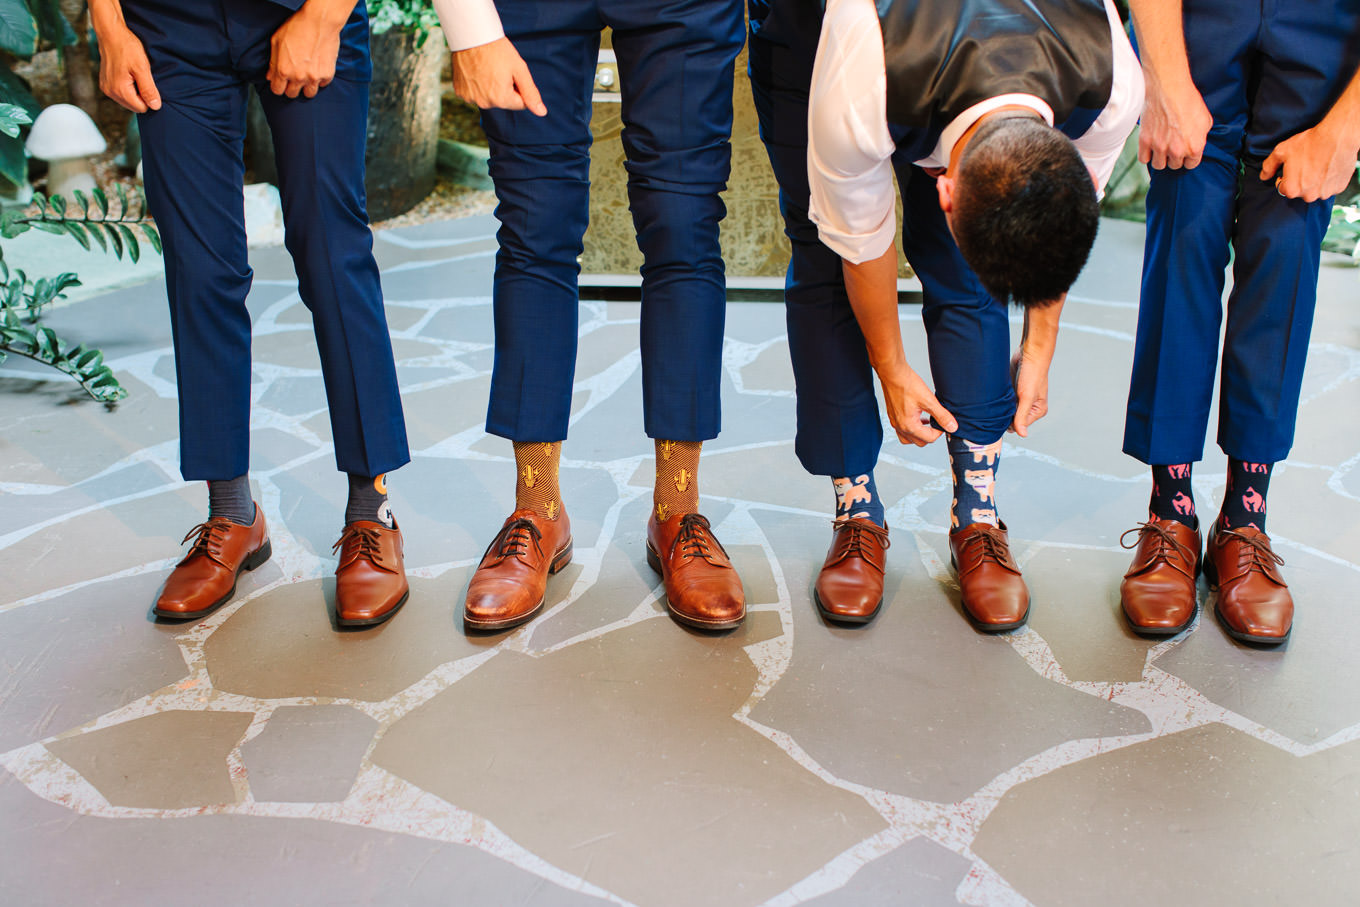 Groomsmen in fun socks | Colorful Downtown Los Angeles Valentine Wedding | Los Angeles wedding photographer | #losangeleswedding #colorfulwedding #DTLA #valentinedtla   Source: Mary Costa Photography | Los Angeles